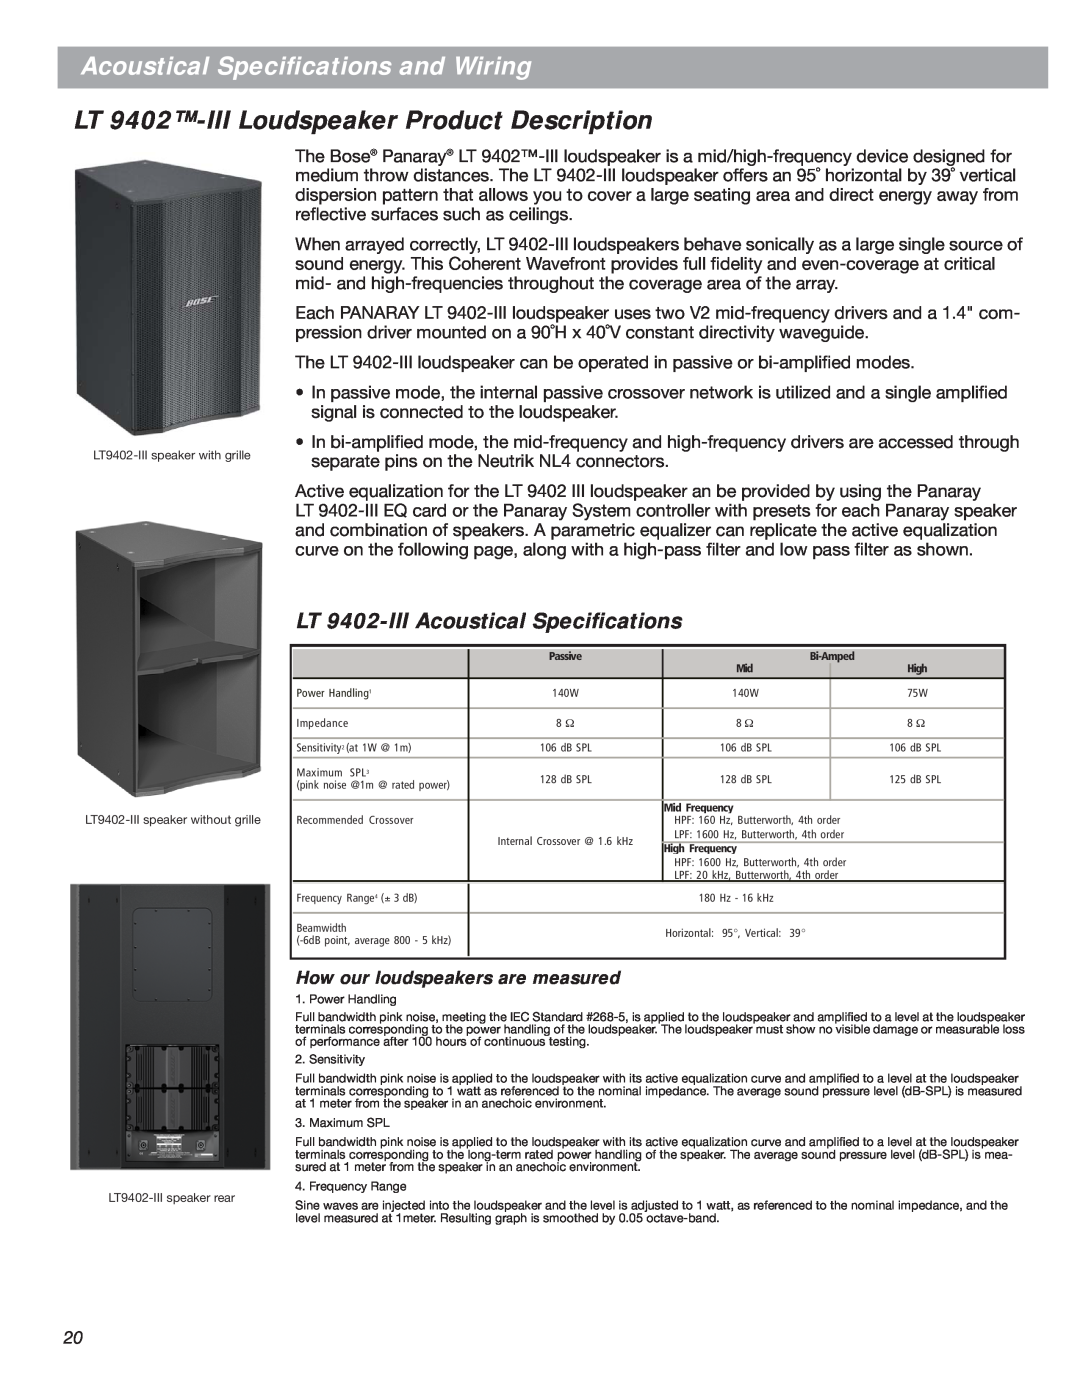 Bose LT Series III manual LT 9402-IIILoudspeaker Product Description, LT 9402-IIIAcoustical Speciﬁcations 